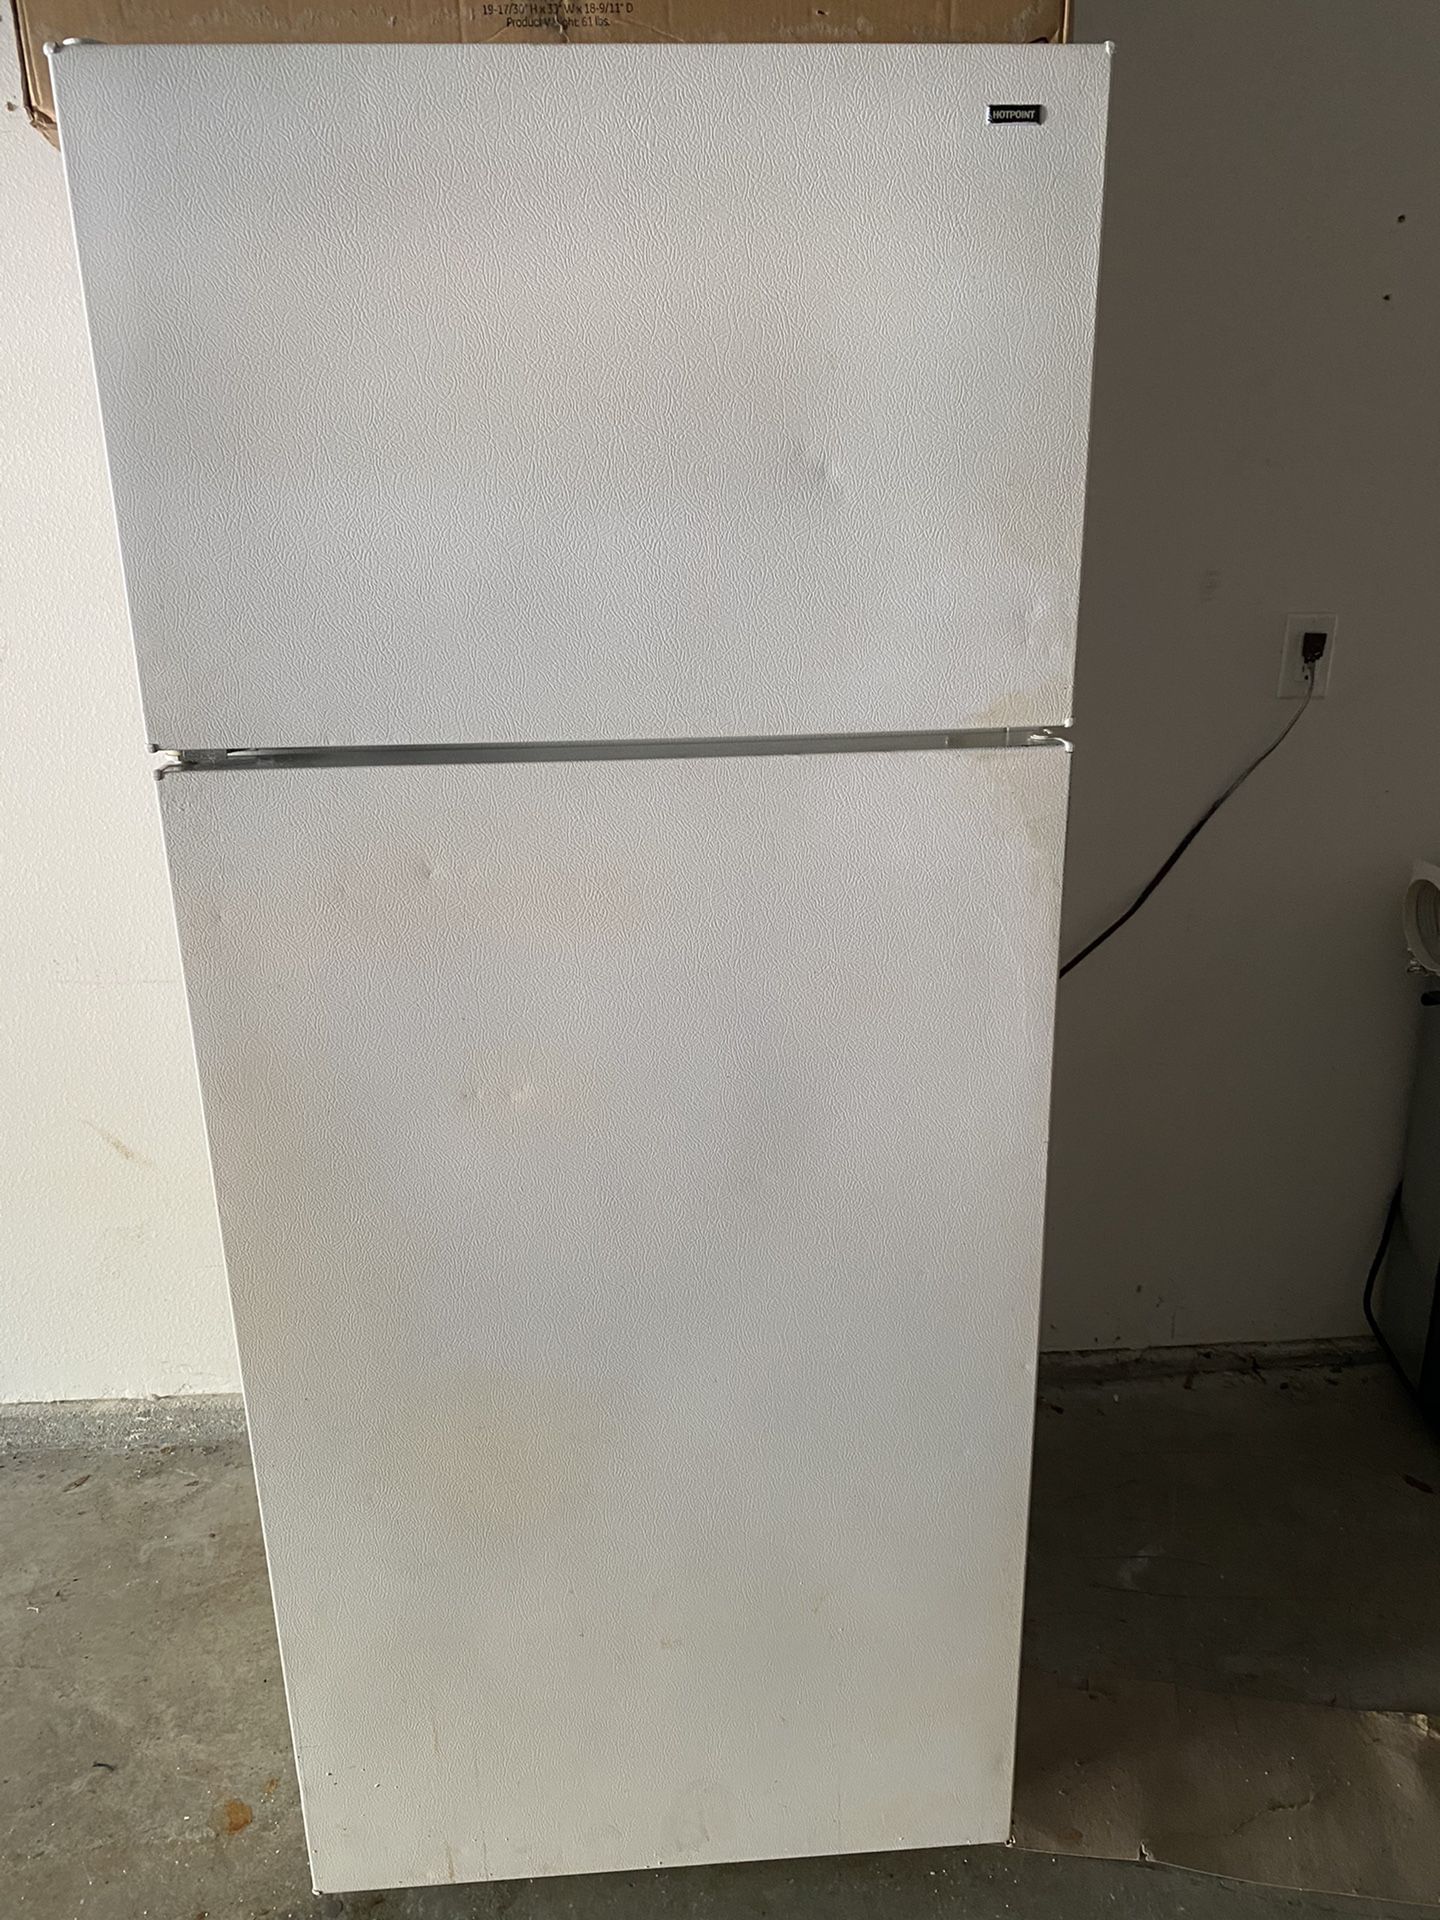 Garage refrigerator still in good condition